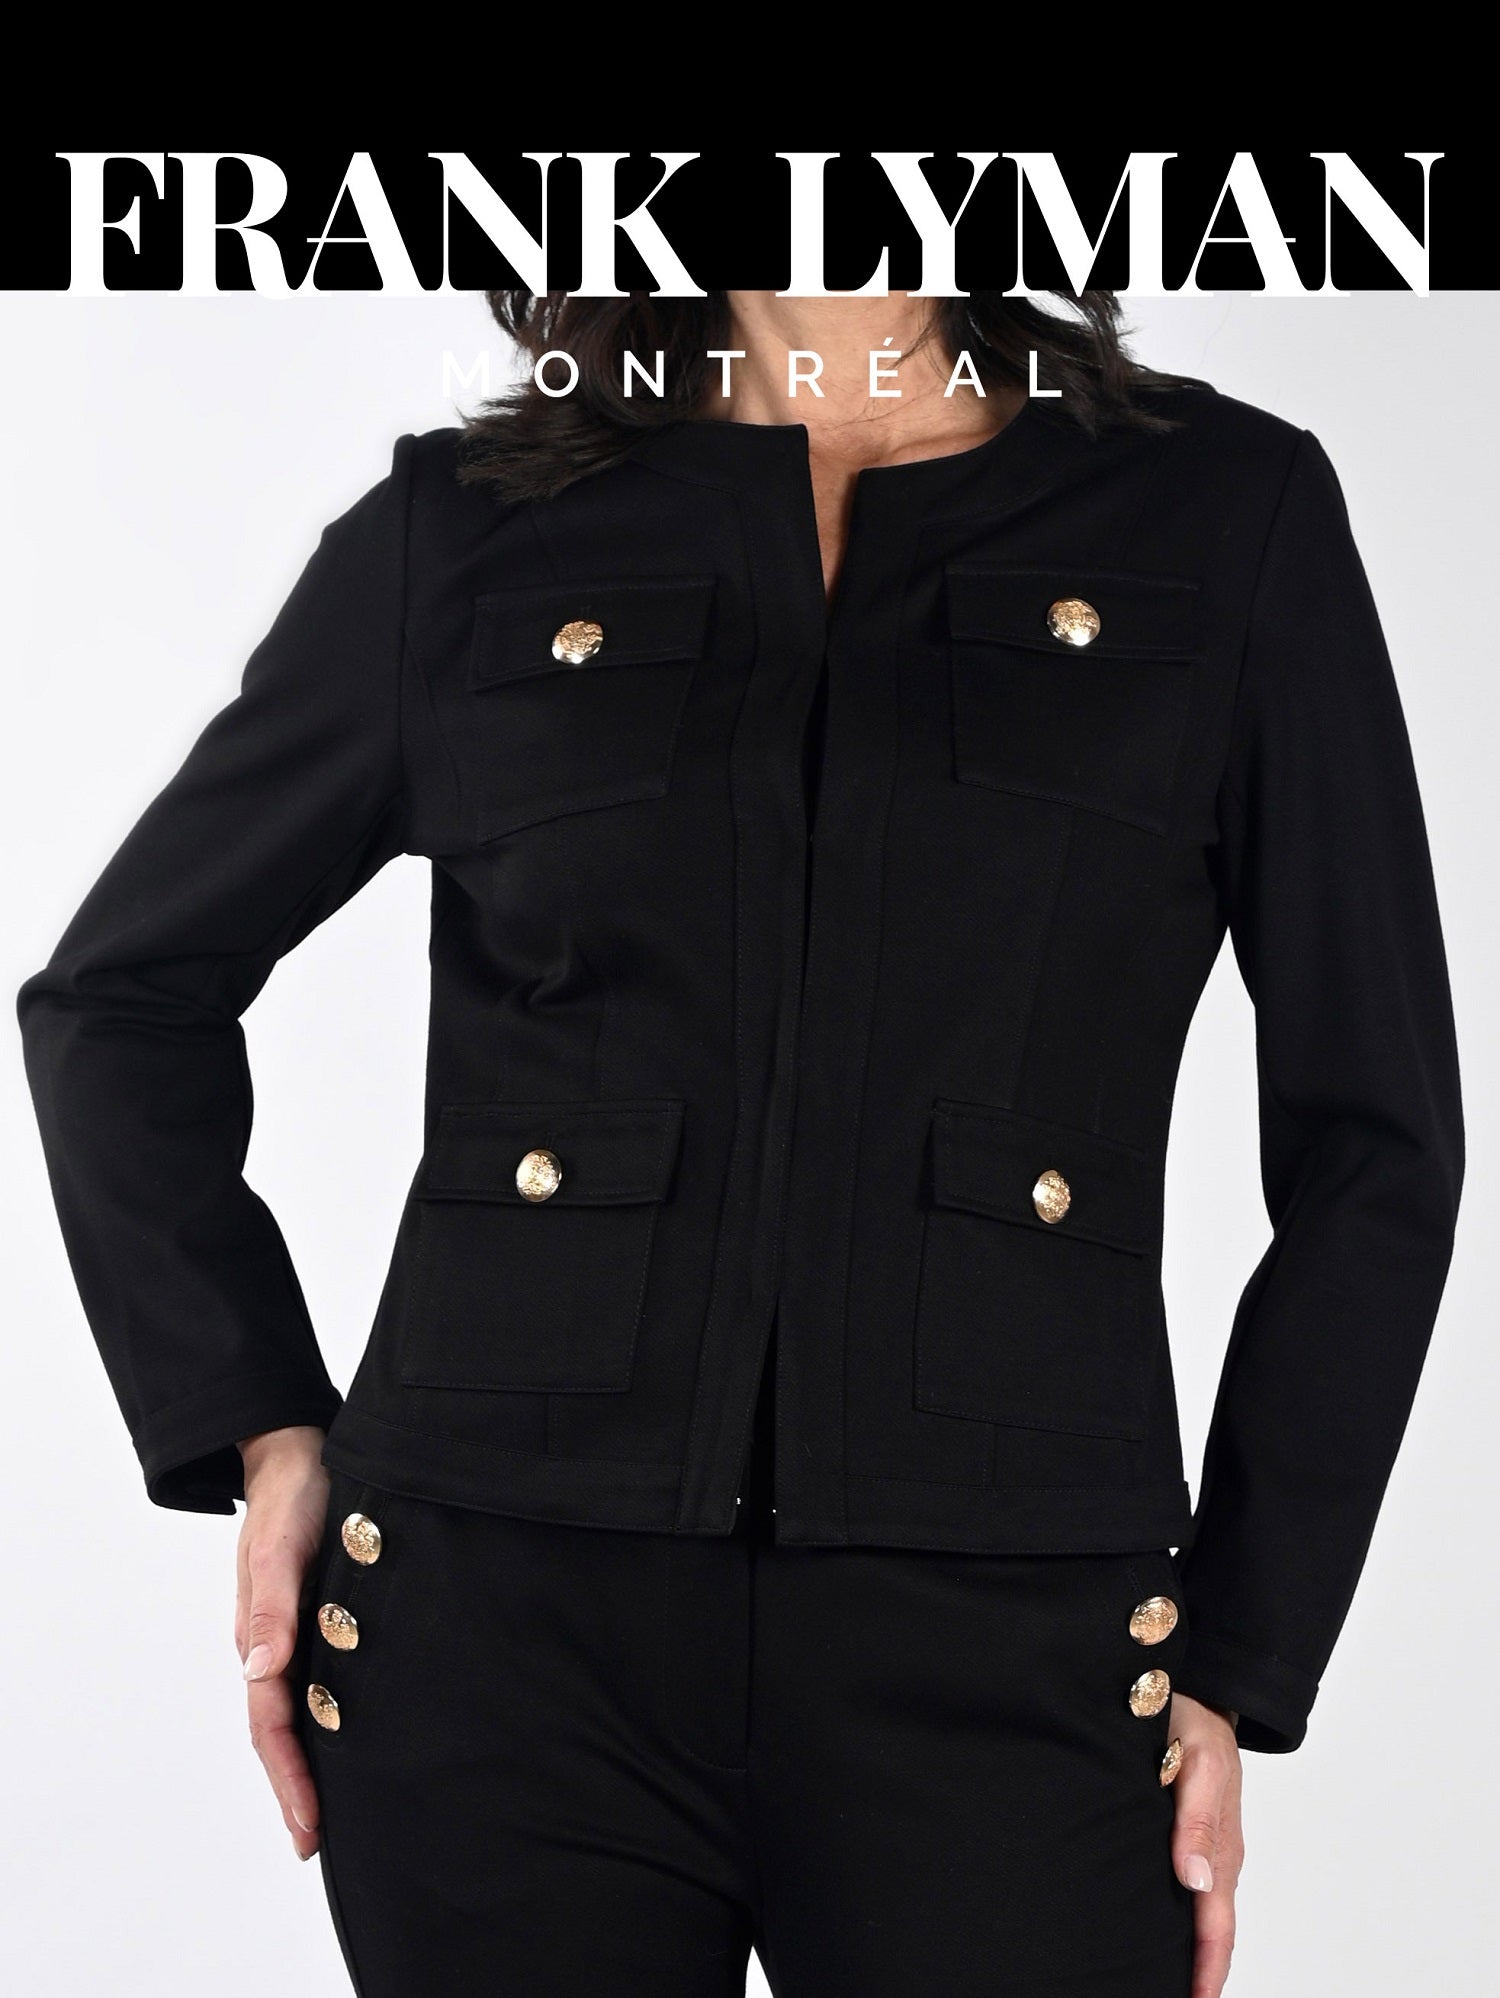 Frank Lyman Montreal Black Suits-Frank Lyman Montreal Jackets-Buy Frank Lyman Montreal Clothing Online